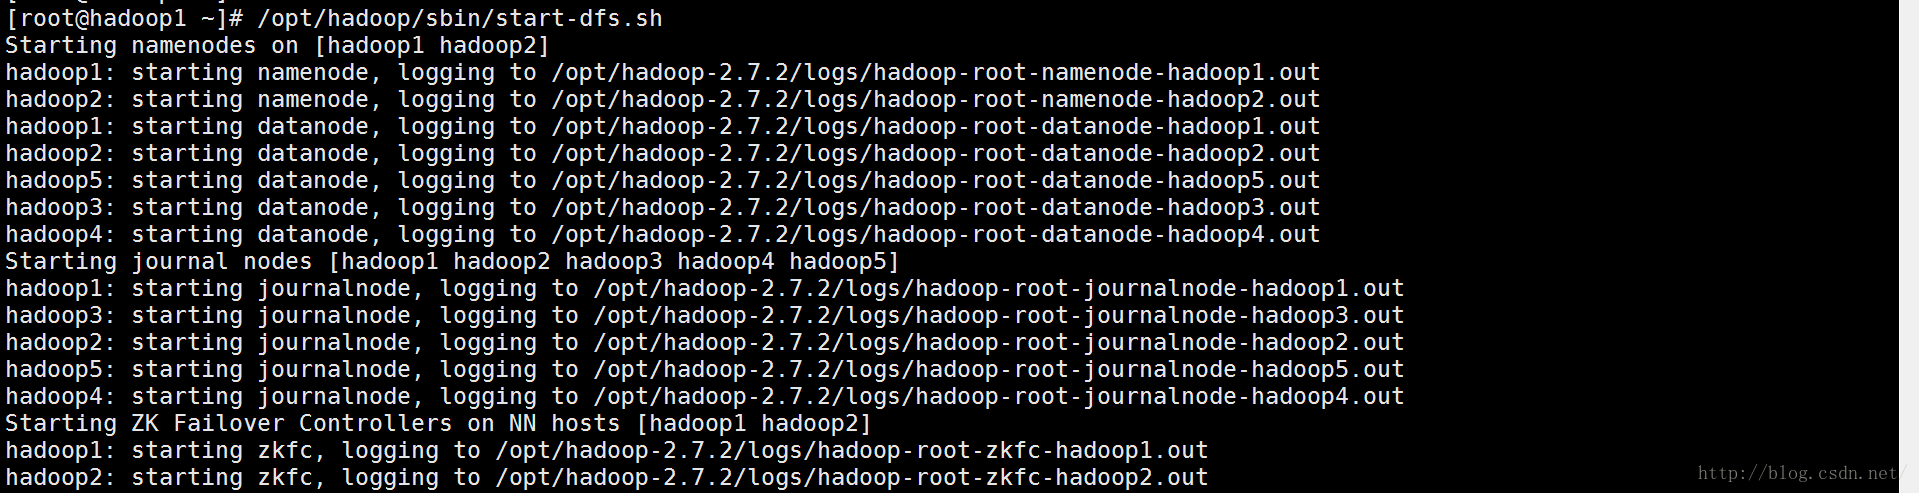 计算机生成了可选文字:|0Starting hadoopl : hadoop2 : hadoopl : hadoop2 : hadoop5 : hadoop3 : hadoop4 : Starting hadoopl : hadoop3 : hadoop2 : hadoop5 : hadoop4 : Starting hadoopl : hadoop2 : [root@hadoopl -]# /opt/hadoop/sbin/start-dfs.sh 7 .2/10gs/hadoop - root - namenode - hadoopl . out 7 . 2/ logs/hadoop - root - namenode - hadoop2 . out 7 . 2/ logs/hadoop - root - datanode - hadoopl . out 7 . 2/ logs/hadoop - root - datanode - hadoop2 . out 7 .2/10gs/hadoop - root - datanode - hadoop5. out 7 . 2/ logs/hadoop - root - datanode - hadoop3. out 7 . 2/ logs/hadoop - root - datanode - hadoop4. out namenodes on [hadoopl hadoop2] starting namenode, logging to /opt/hadoop starting namenode, logging to /opt/hadoop starting datanode, logging to /opt/hadoop starting datanode, logging to /opt/hadoop starting datanode, logging to /opt/hadoop starting datanode, logging to /opt/hadoop starting datanode, logging to /opt/hadoop journal nodes [hadoopl hadoop2 hadoop3 hadoop4 hadoop5] starting journalnode, logging to /opt/hadoop-2.7.2/logs/hadoop- root-journalnode-hadoopl.out starting journalnode, logging to /opt/hadoop-2.7.2/logs/hadoop- root-journalnode-hadoop3.out starting journalnode, logging to /opt/hadoop-2.7.2/logs/hadoop- root-journalnode-hadoop2. out starting journalnode, logging to /opt/hadoop-2.7.2/logs/hadoop- root-journalnode-hadoop5.out starting journalnode, logging to /opt/hadoop-2.7.2/logs/hadoop- root-journalnode-hadoop4.out ZK Failover Controllers on NN hosts [hadoopl hadoop2] starting zkfc, logging to /opt/hadoop-2.7.2/logs/hadoop- root-zkfc-hadoopl.out starting zkfc, logging to /opt/hadoop-2.7.2/logs/hadoop- root-zkfc-hadoop2. out